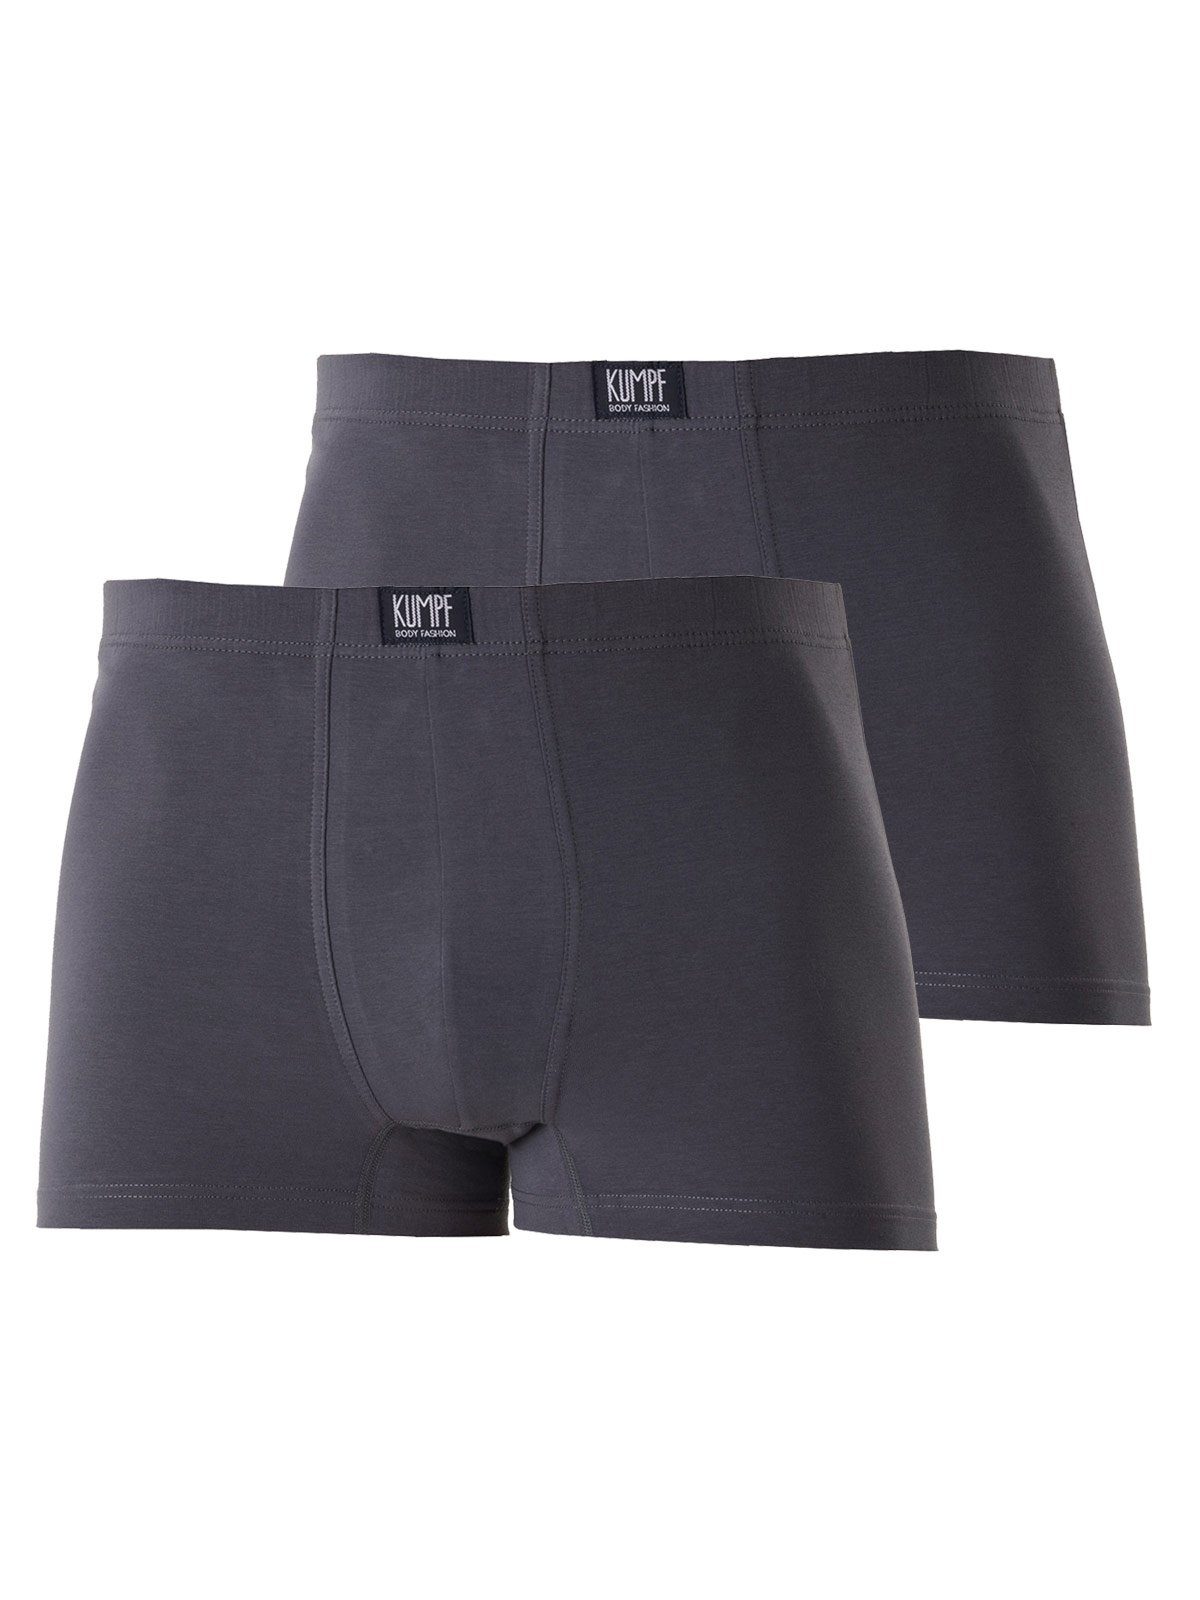 KUMPF Retro Pants 2er Sparpack Herren Pants Bio Cotton (Spar-Set, 2-St) hohe Markenqualität mittelgrau | Unterhosen